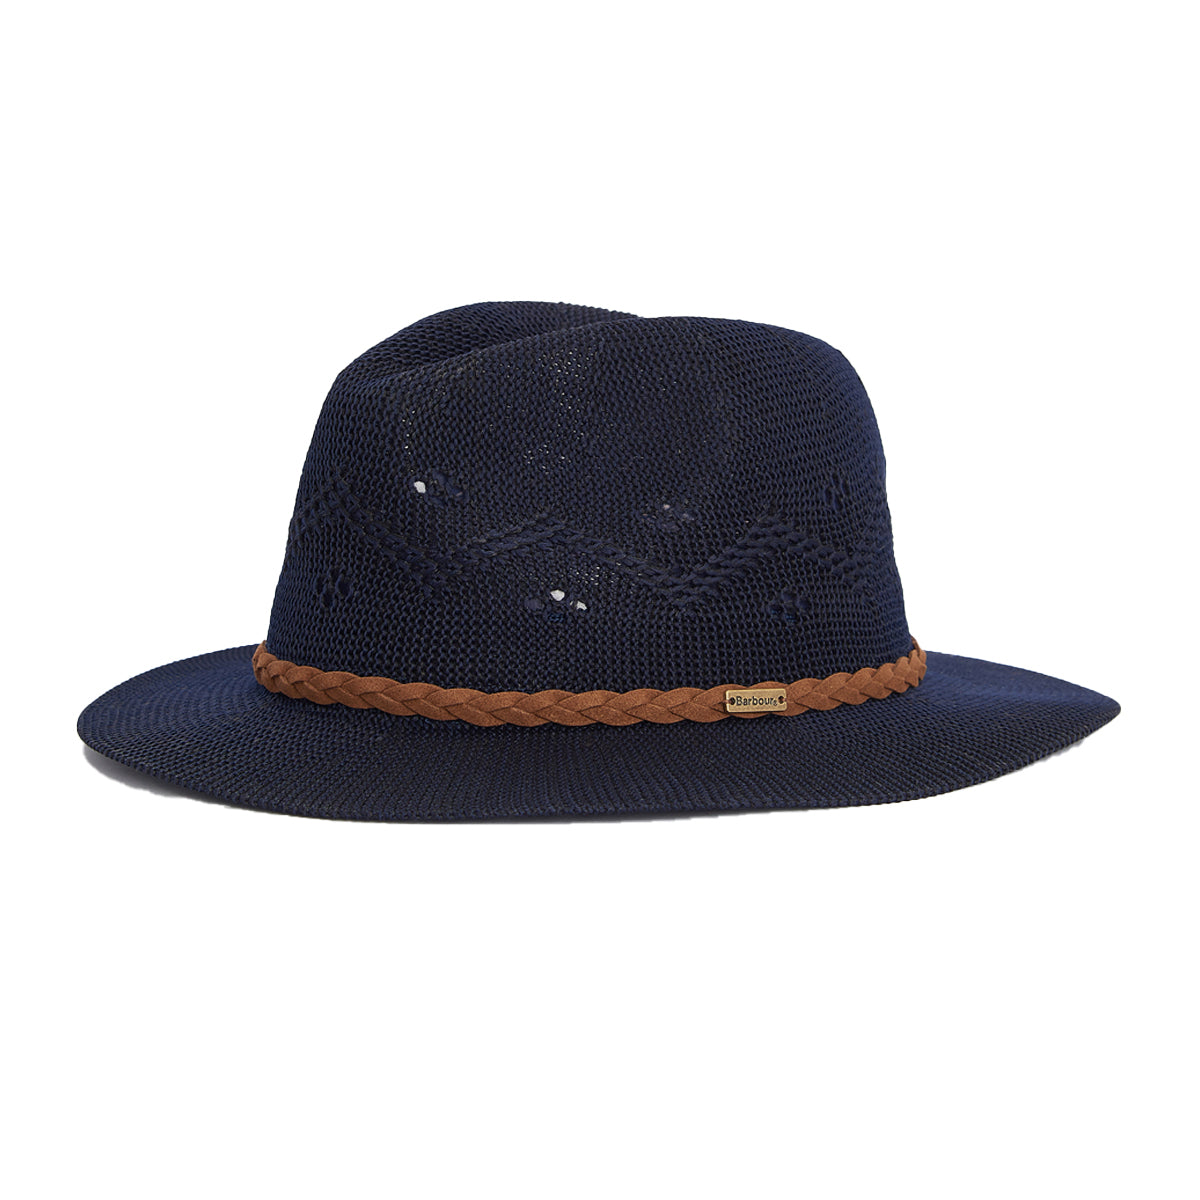 Barbour Flowerdale Trilby Summer Hat